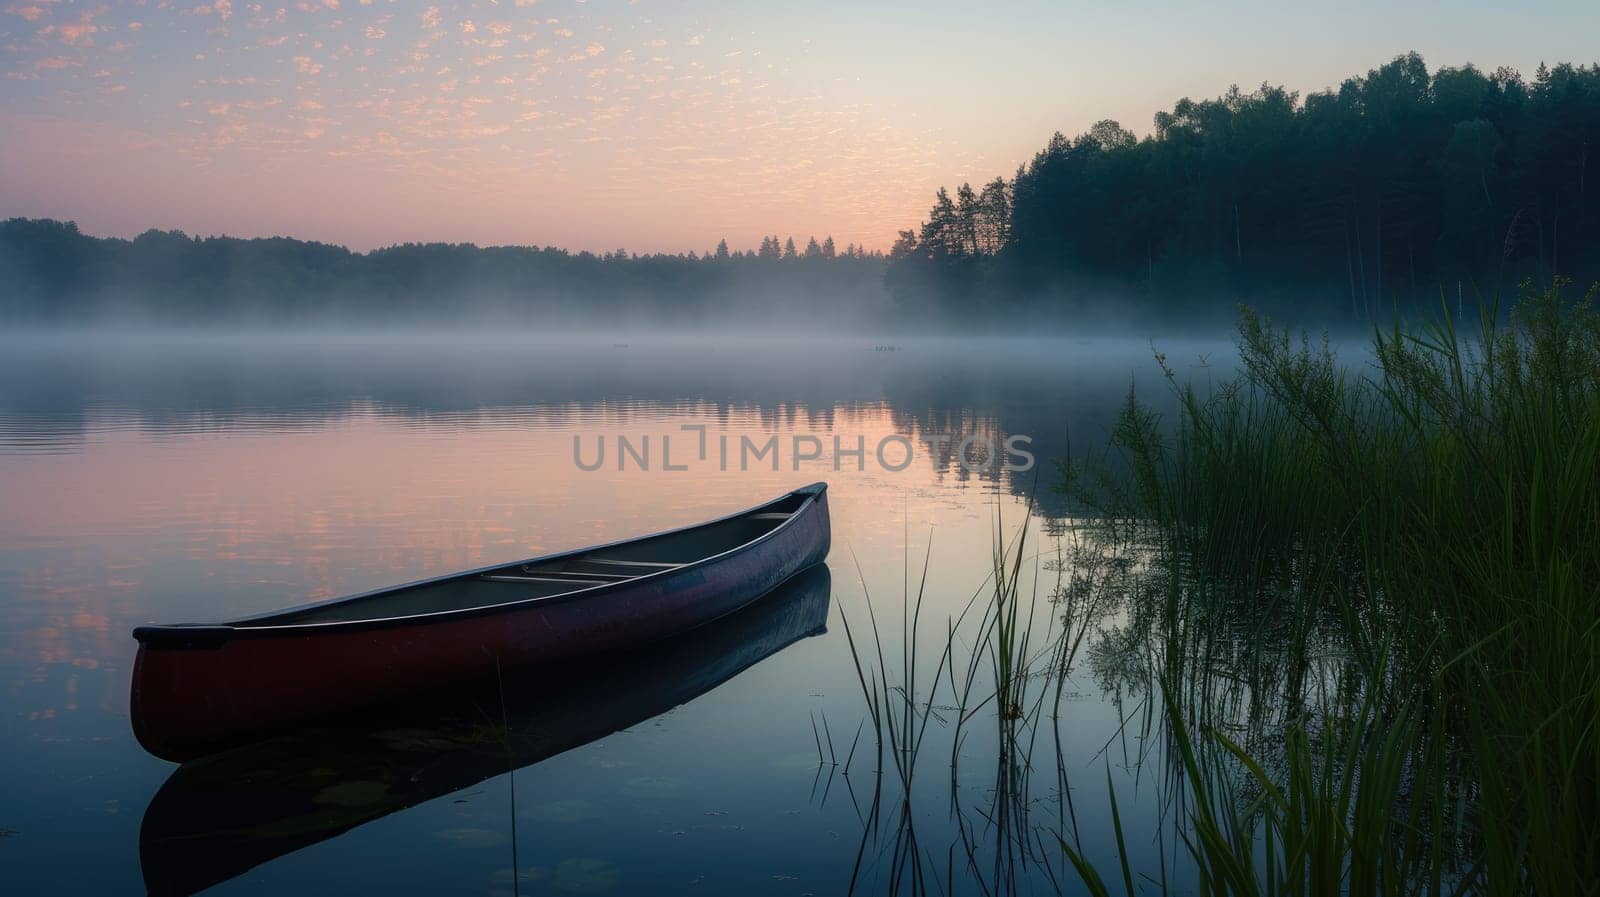 Canoe on a Misty Lake at Sunrise. Resplendent. by biancoblue